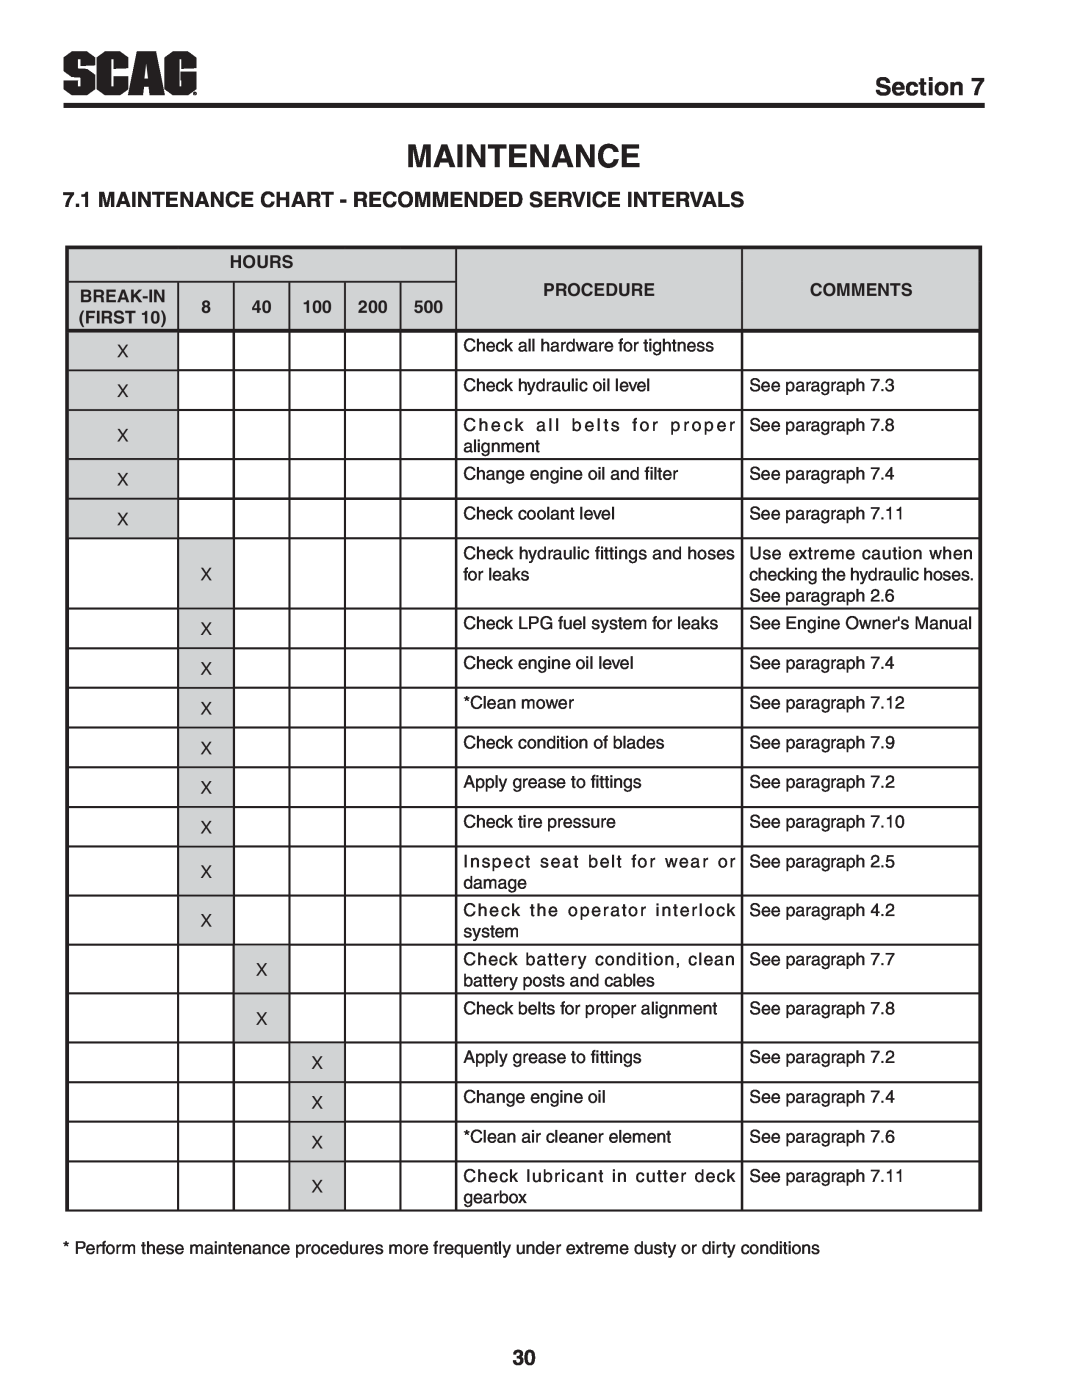 Scag Power Equipment STT52V-25CH-LP, STT61V-25CH-LP Maintenance Chart - Recommended Service Intervals, Section 